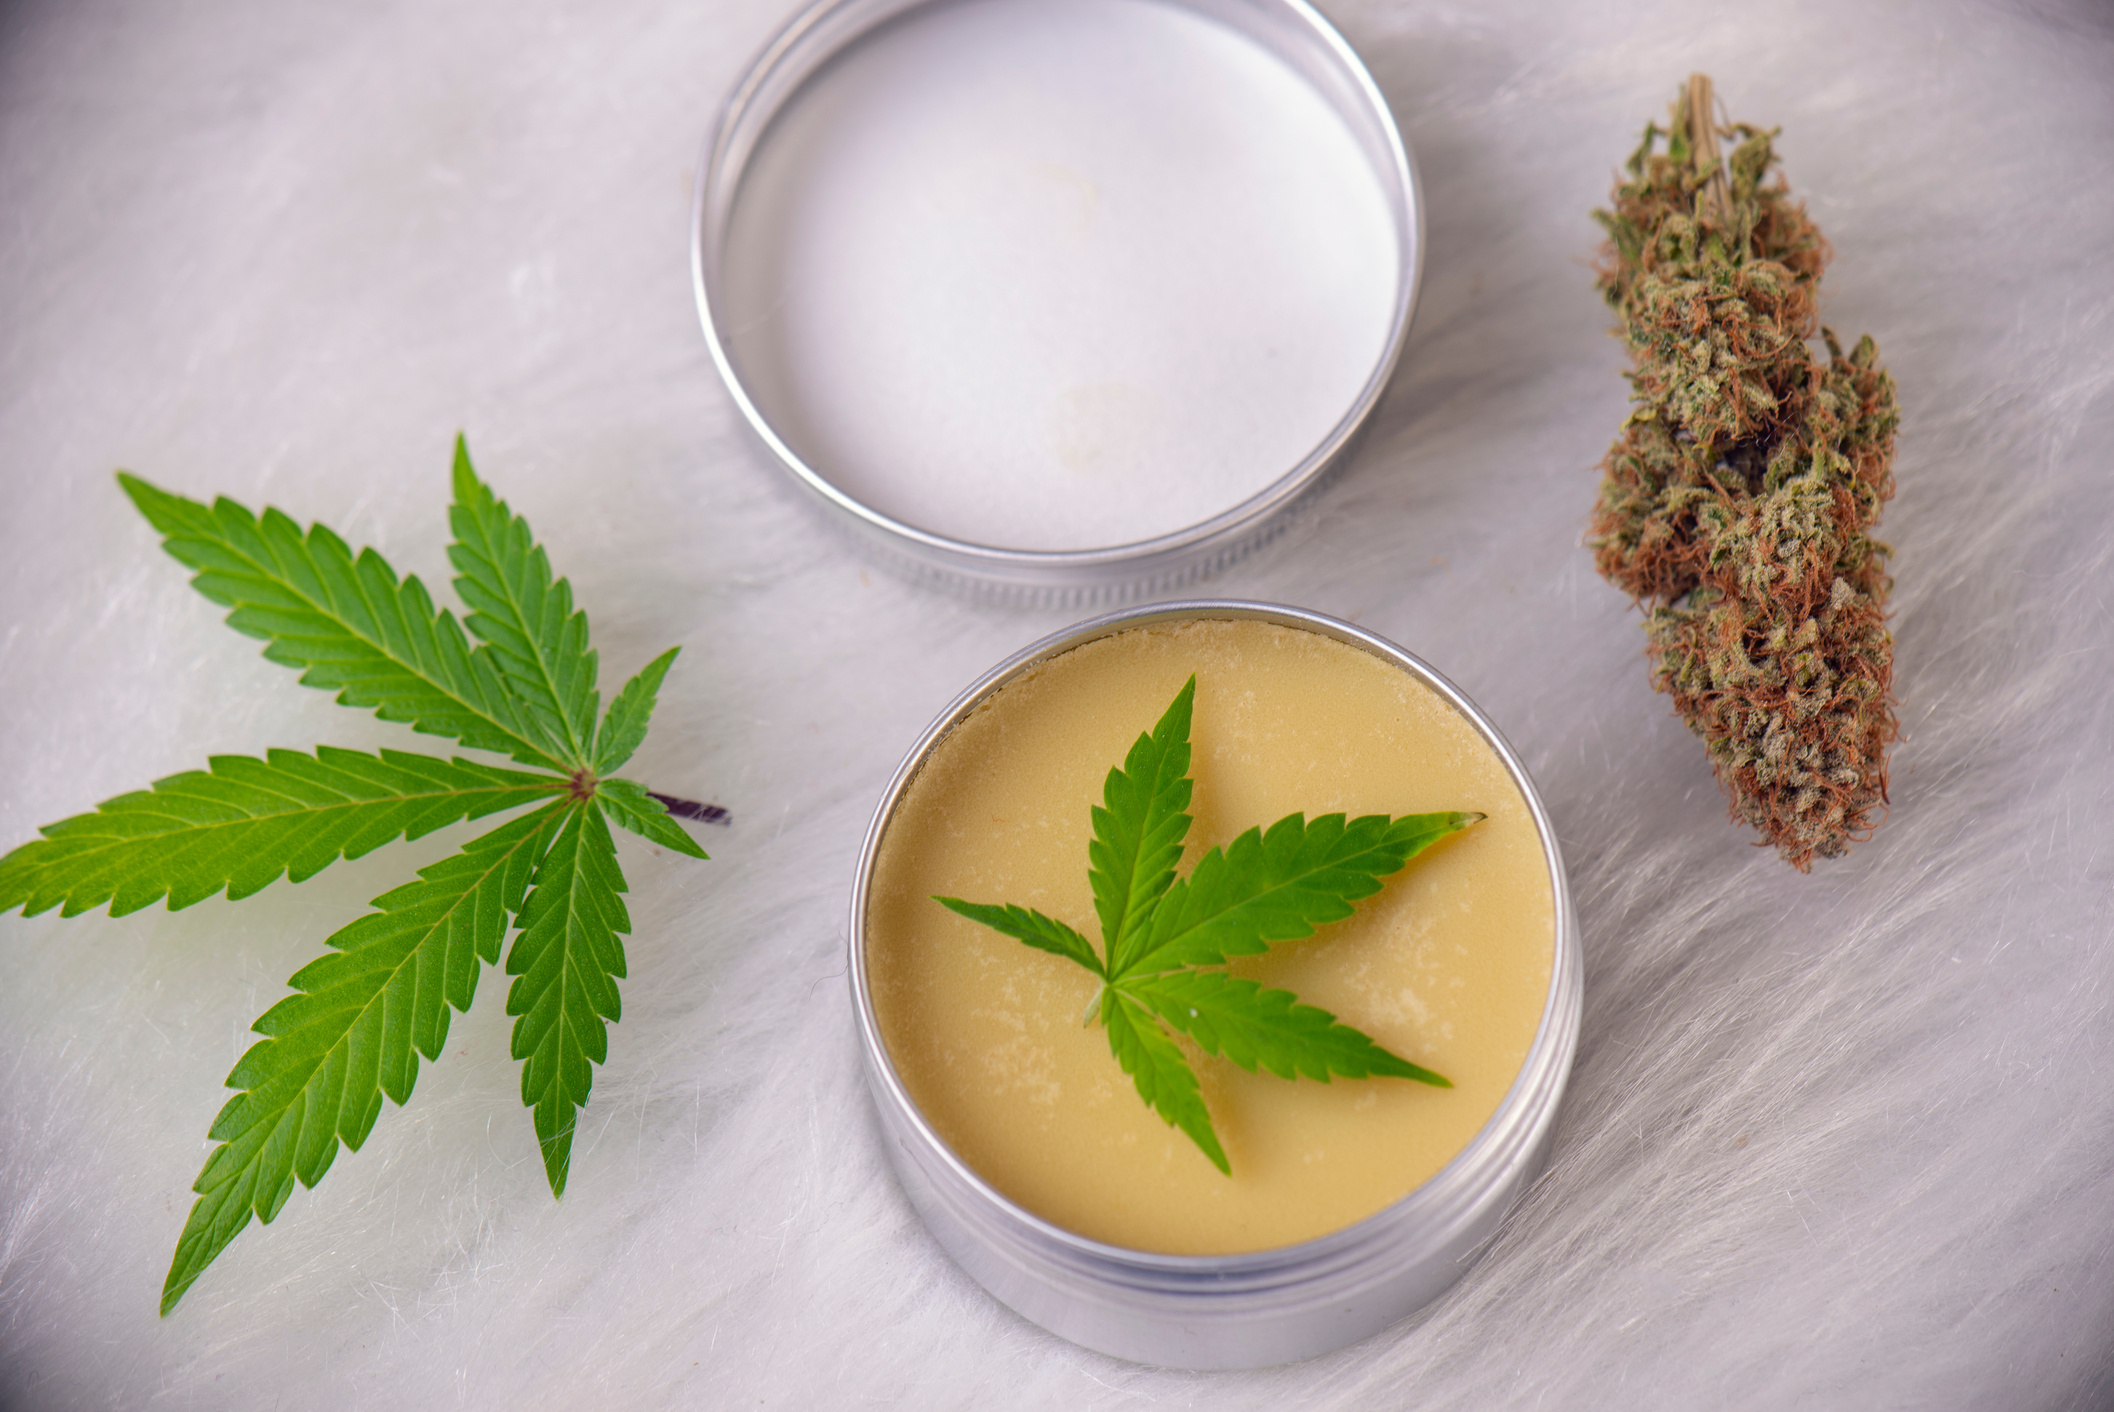 Hemp cream with marijuana leaves - cannabis topicals concept